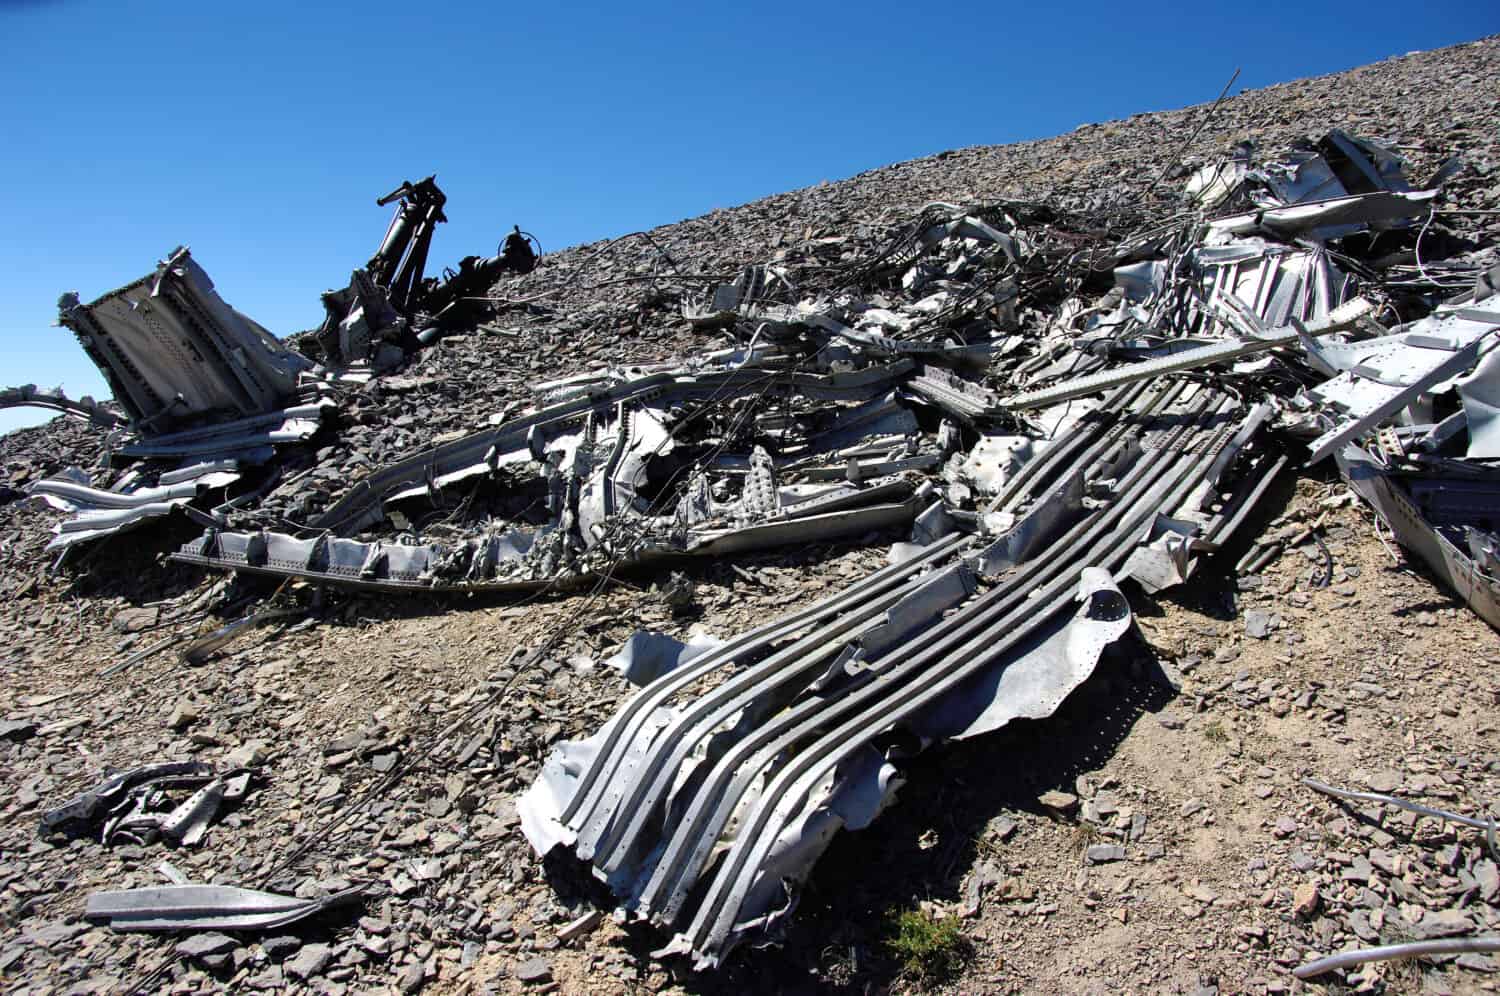 Air Force crash site, Spring Mountains National Recreation Area, Nevada, USA